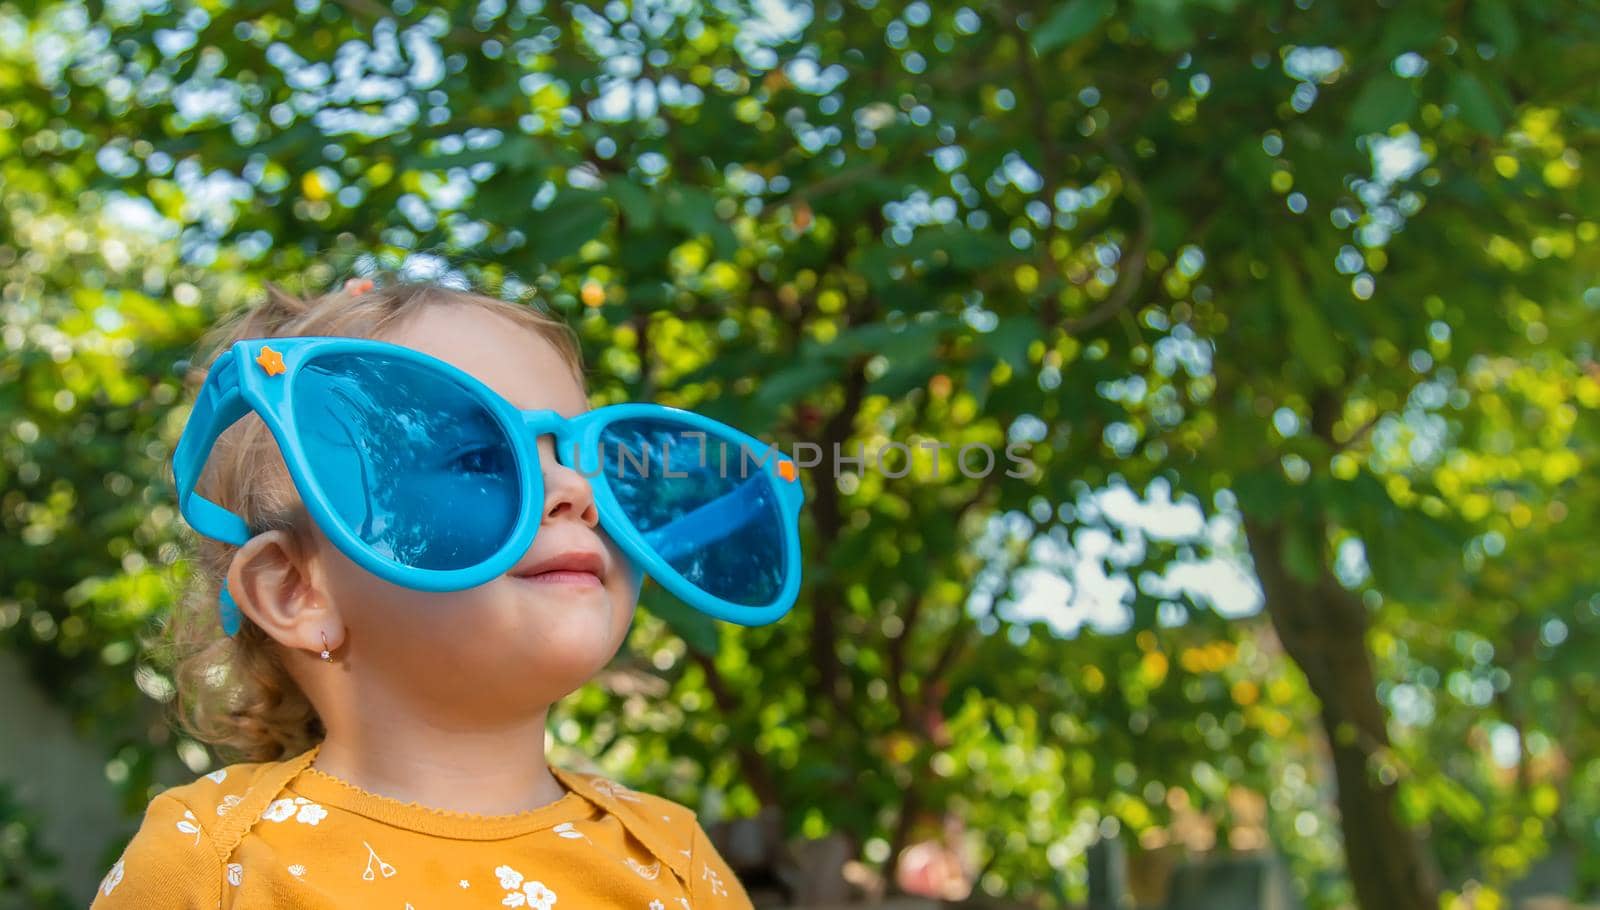 Children enjoy nature in glasses. Selective focus. Nature.